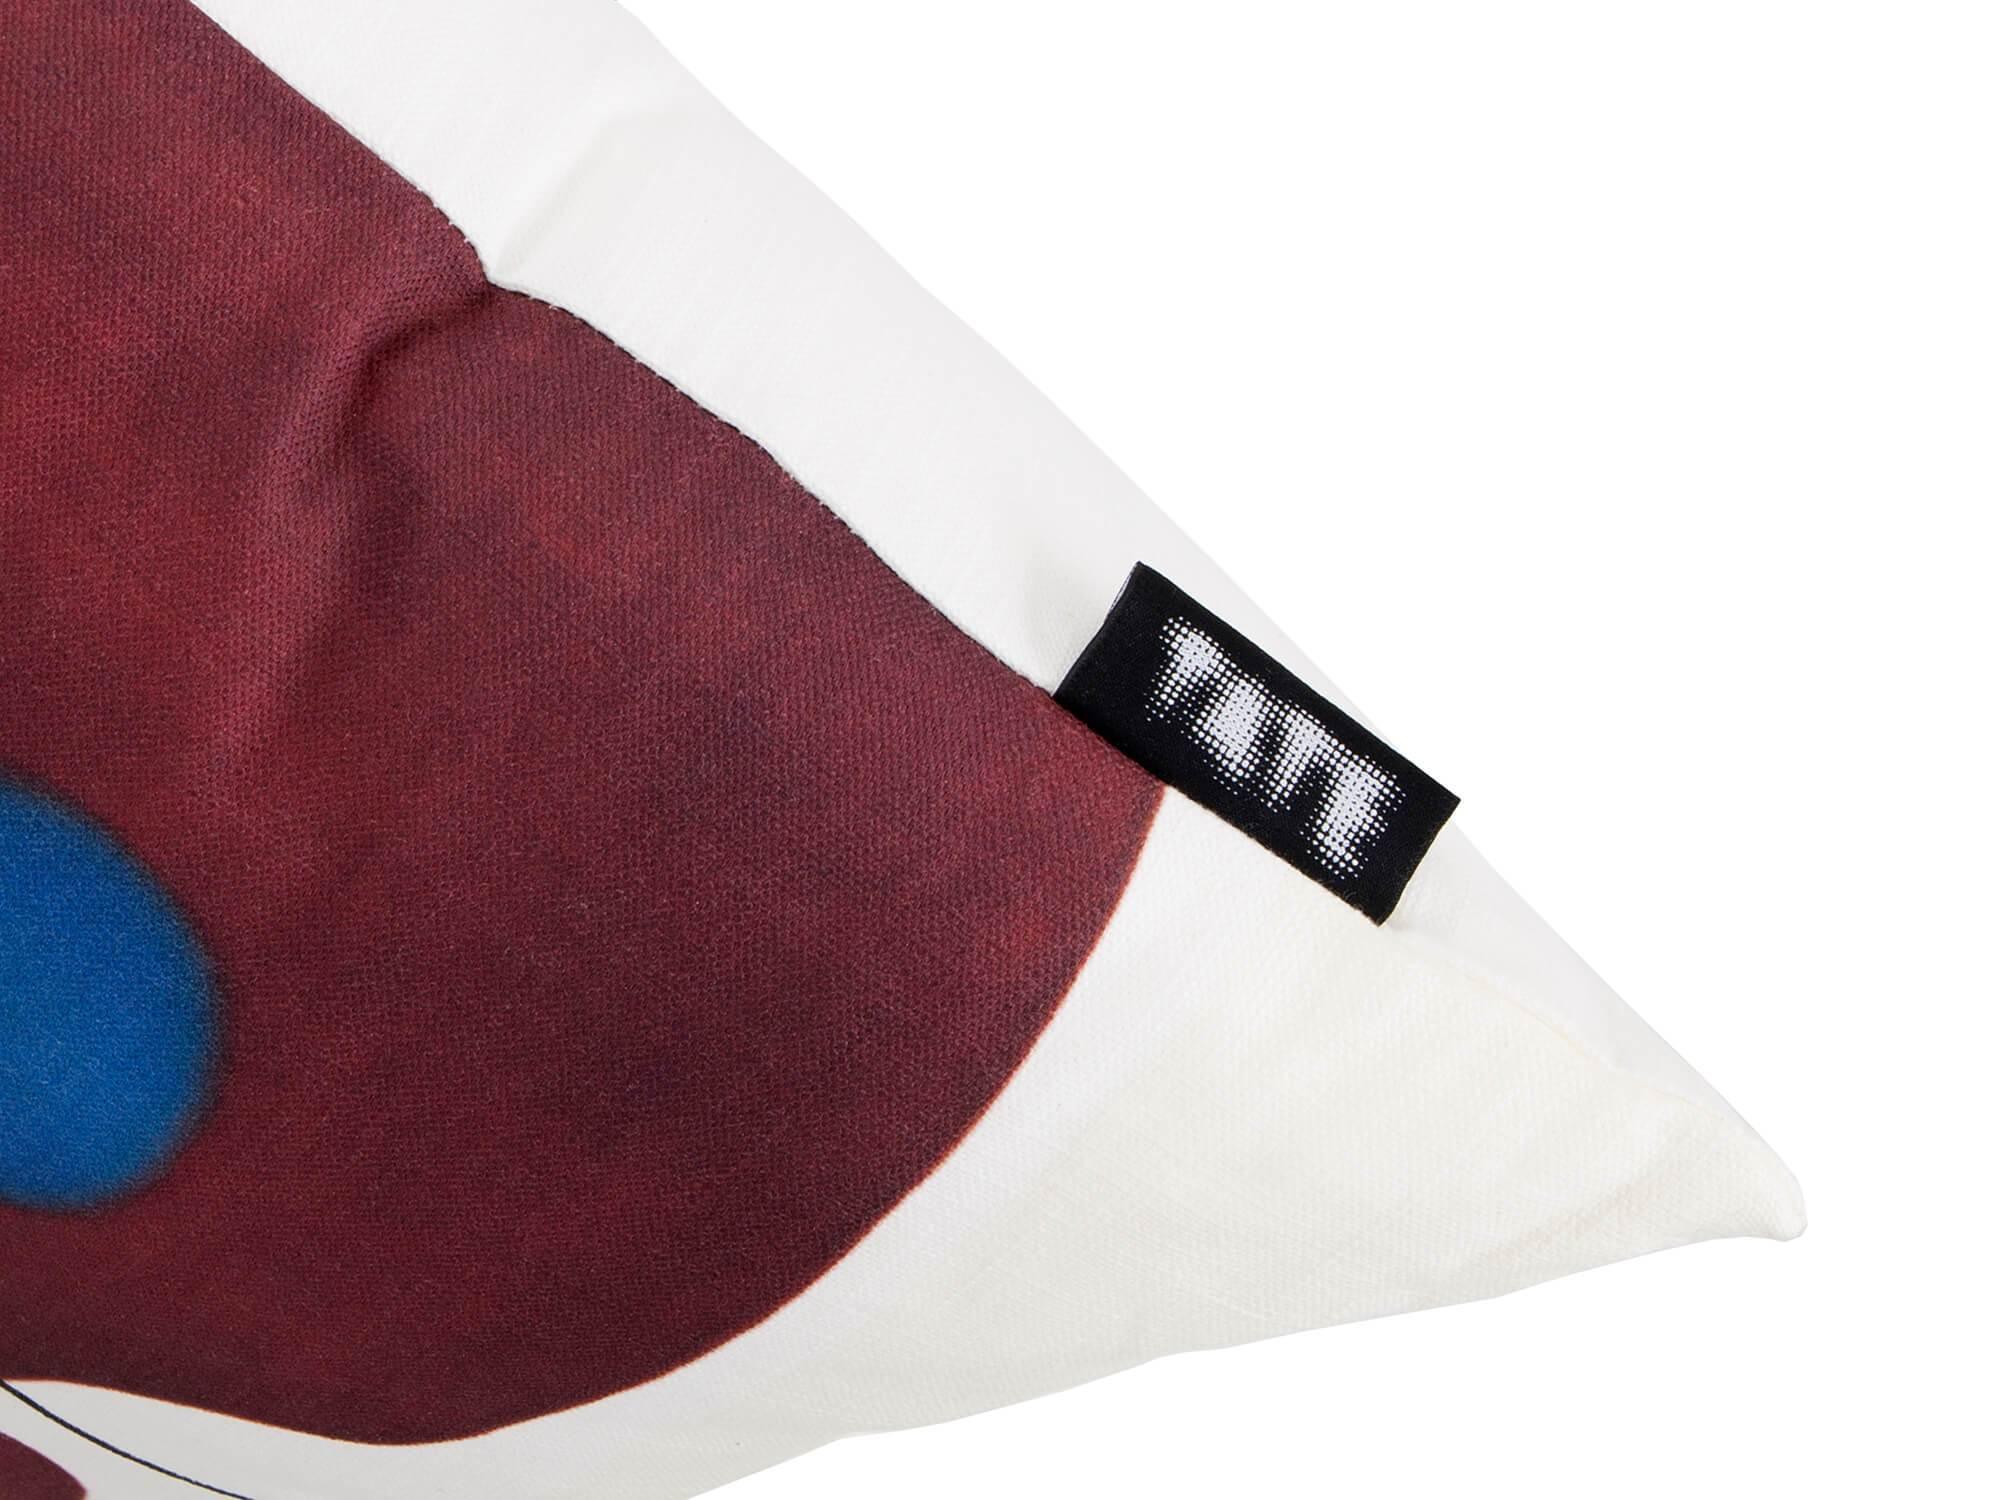 Linear Development -TATE - Victor Pasmore Cushion - Handmade Cushions UK - WeLoveCushions